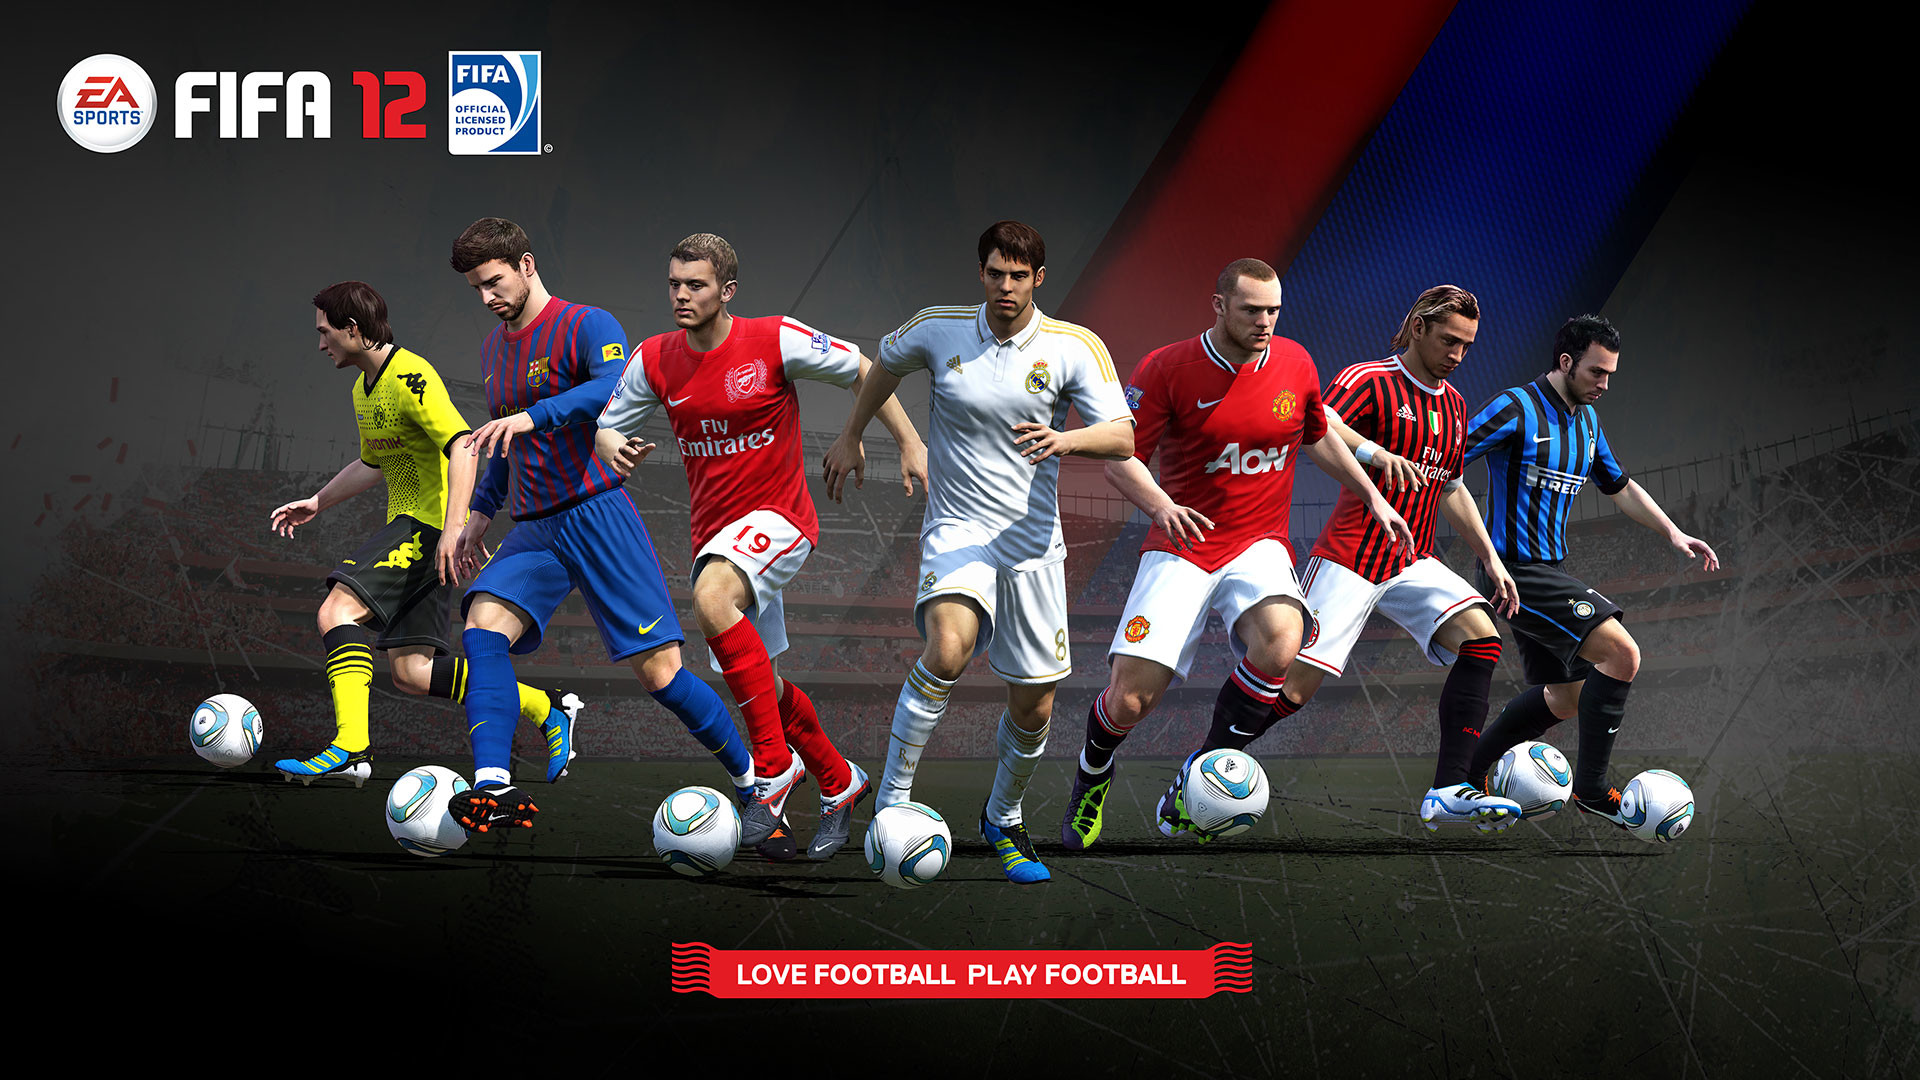 fifa 17 wallpaper hd,football player,soccer player,player,team,football